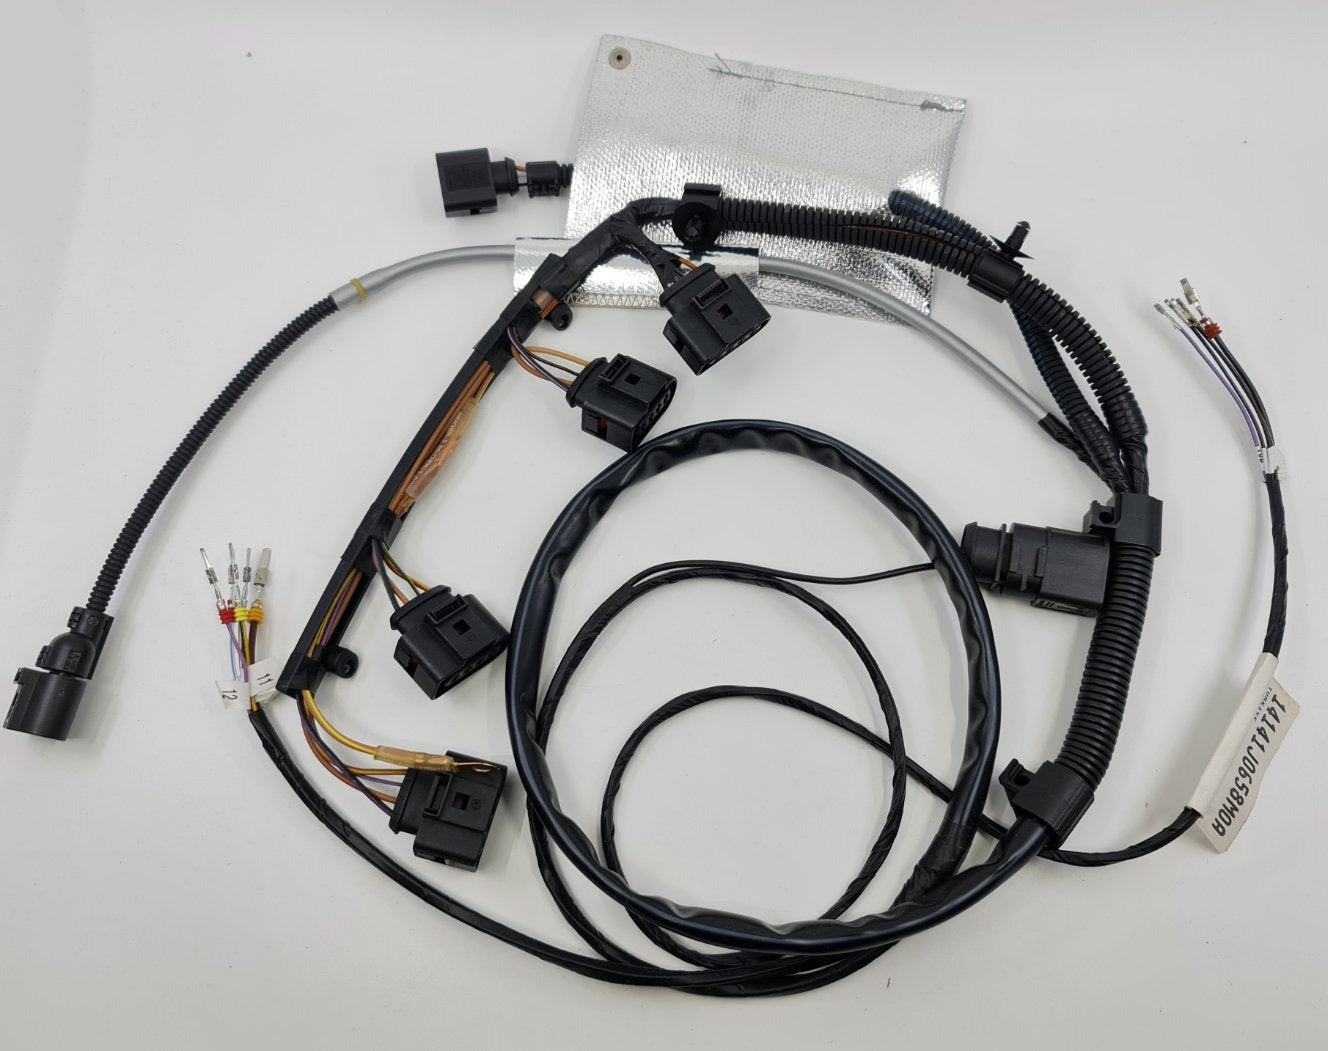 Fsi Wiring In Mk2 Golf 1j0971658m – Audi & Volkswagen 1.8t/ 2.0t – Replacement Coilpack Wiring Harness Of Fsi Wiring In Mk2 Golf